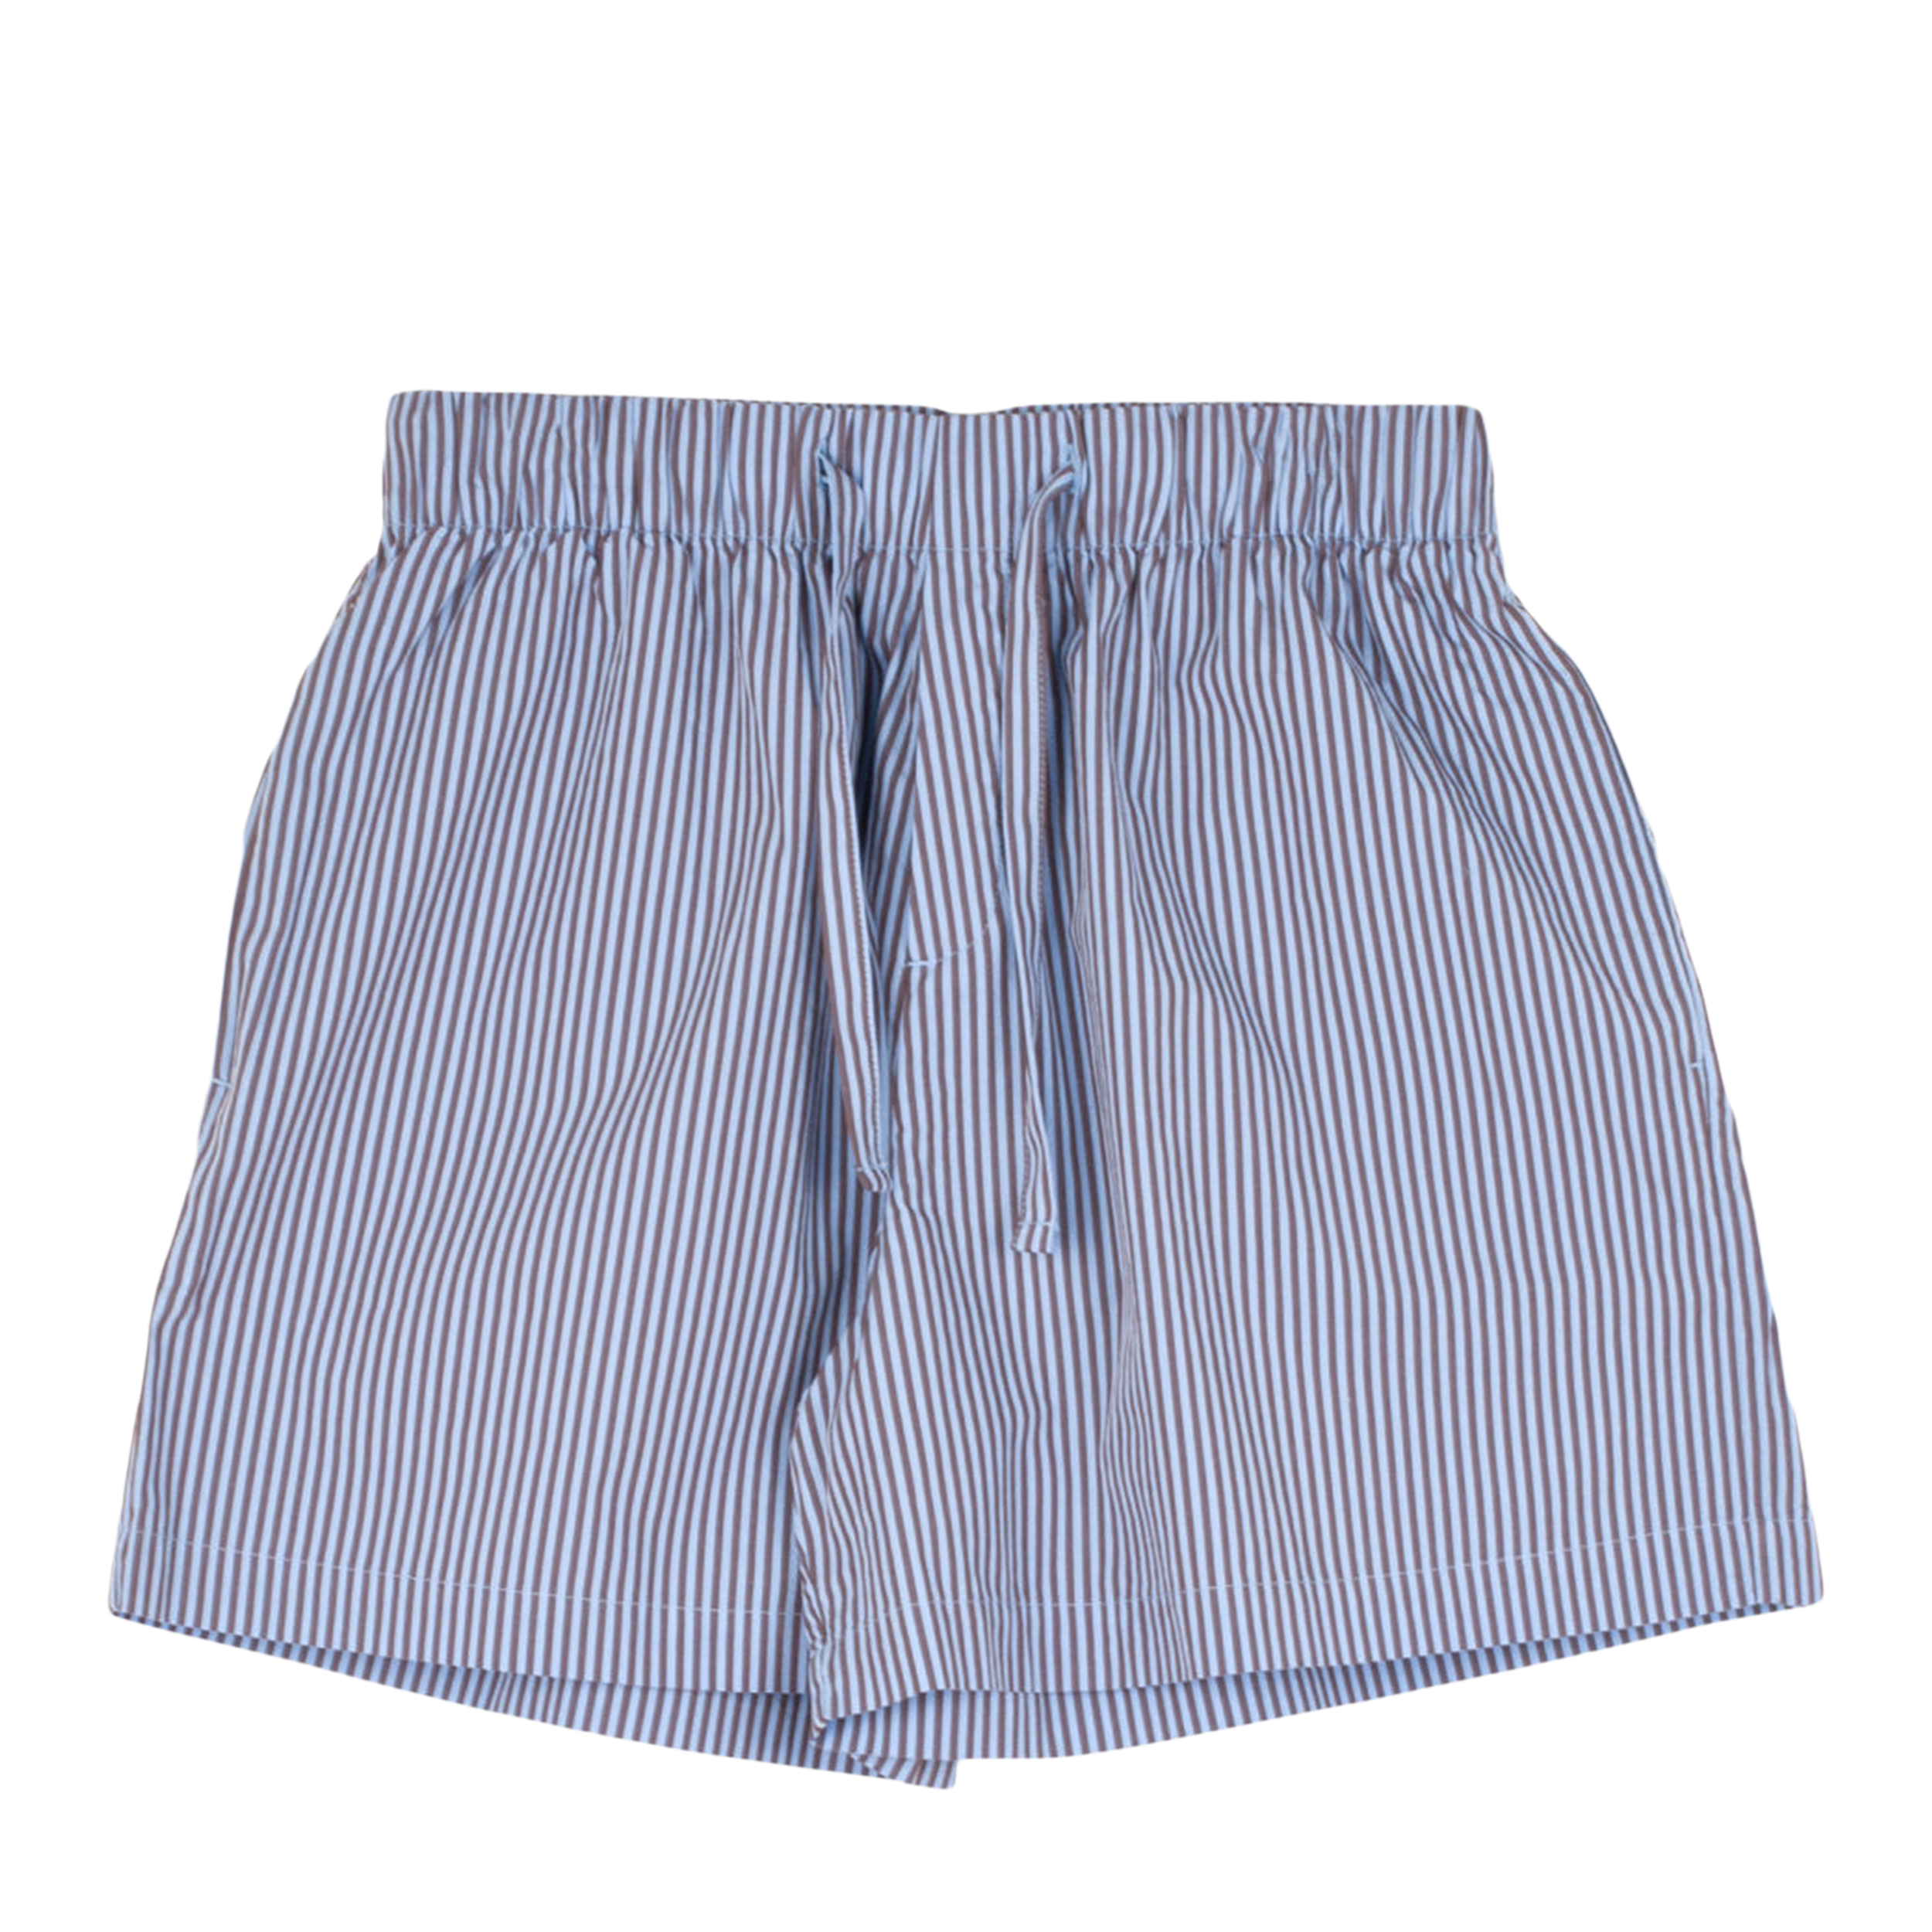 Tekla Tekla Poplin Pyjamas Shorts Blue & Brown Striped (L) SWS-BB Poplin Pyjamas Shorts Blue & Brown Striped (L) - фото 1